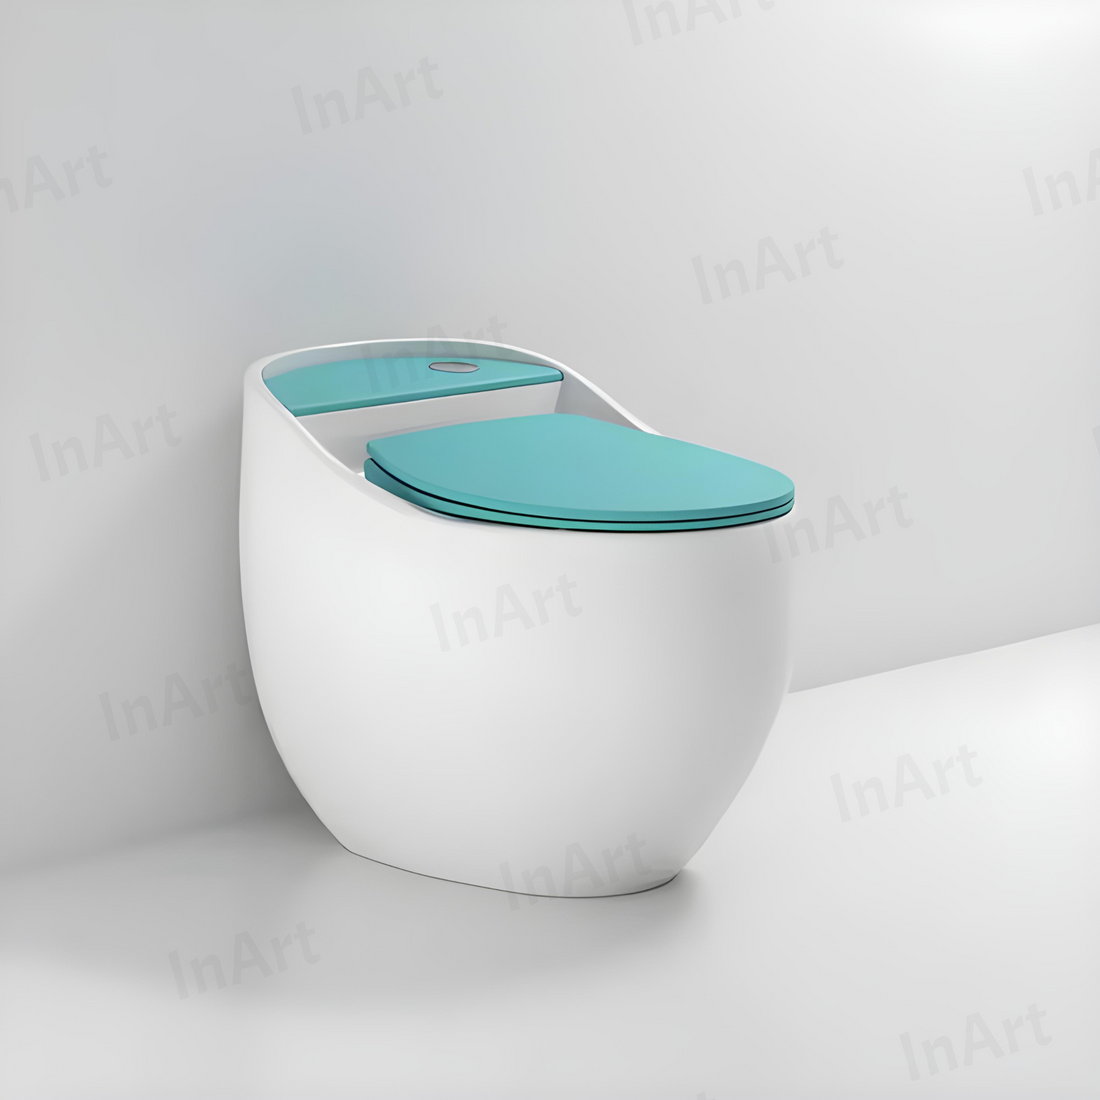 InArt Ceramic One Piece Western Toilet with Soft Close Seat, S Trap, White & Blue - 66.5x45.5x56 cm - InArt-Studio